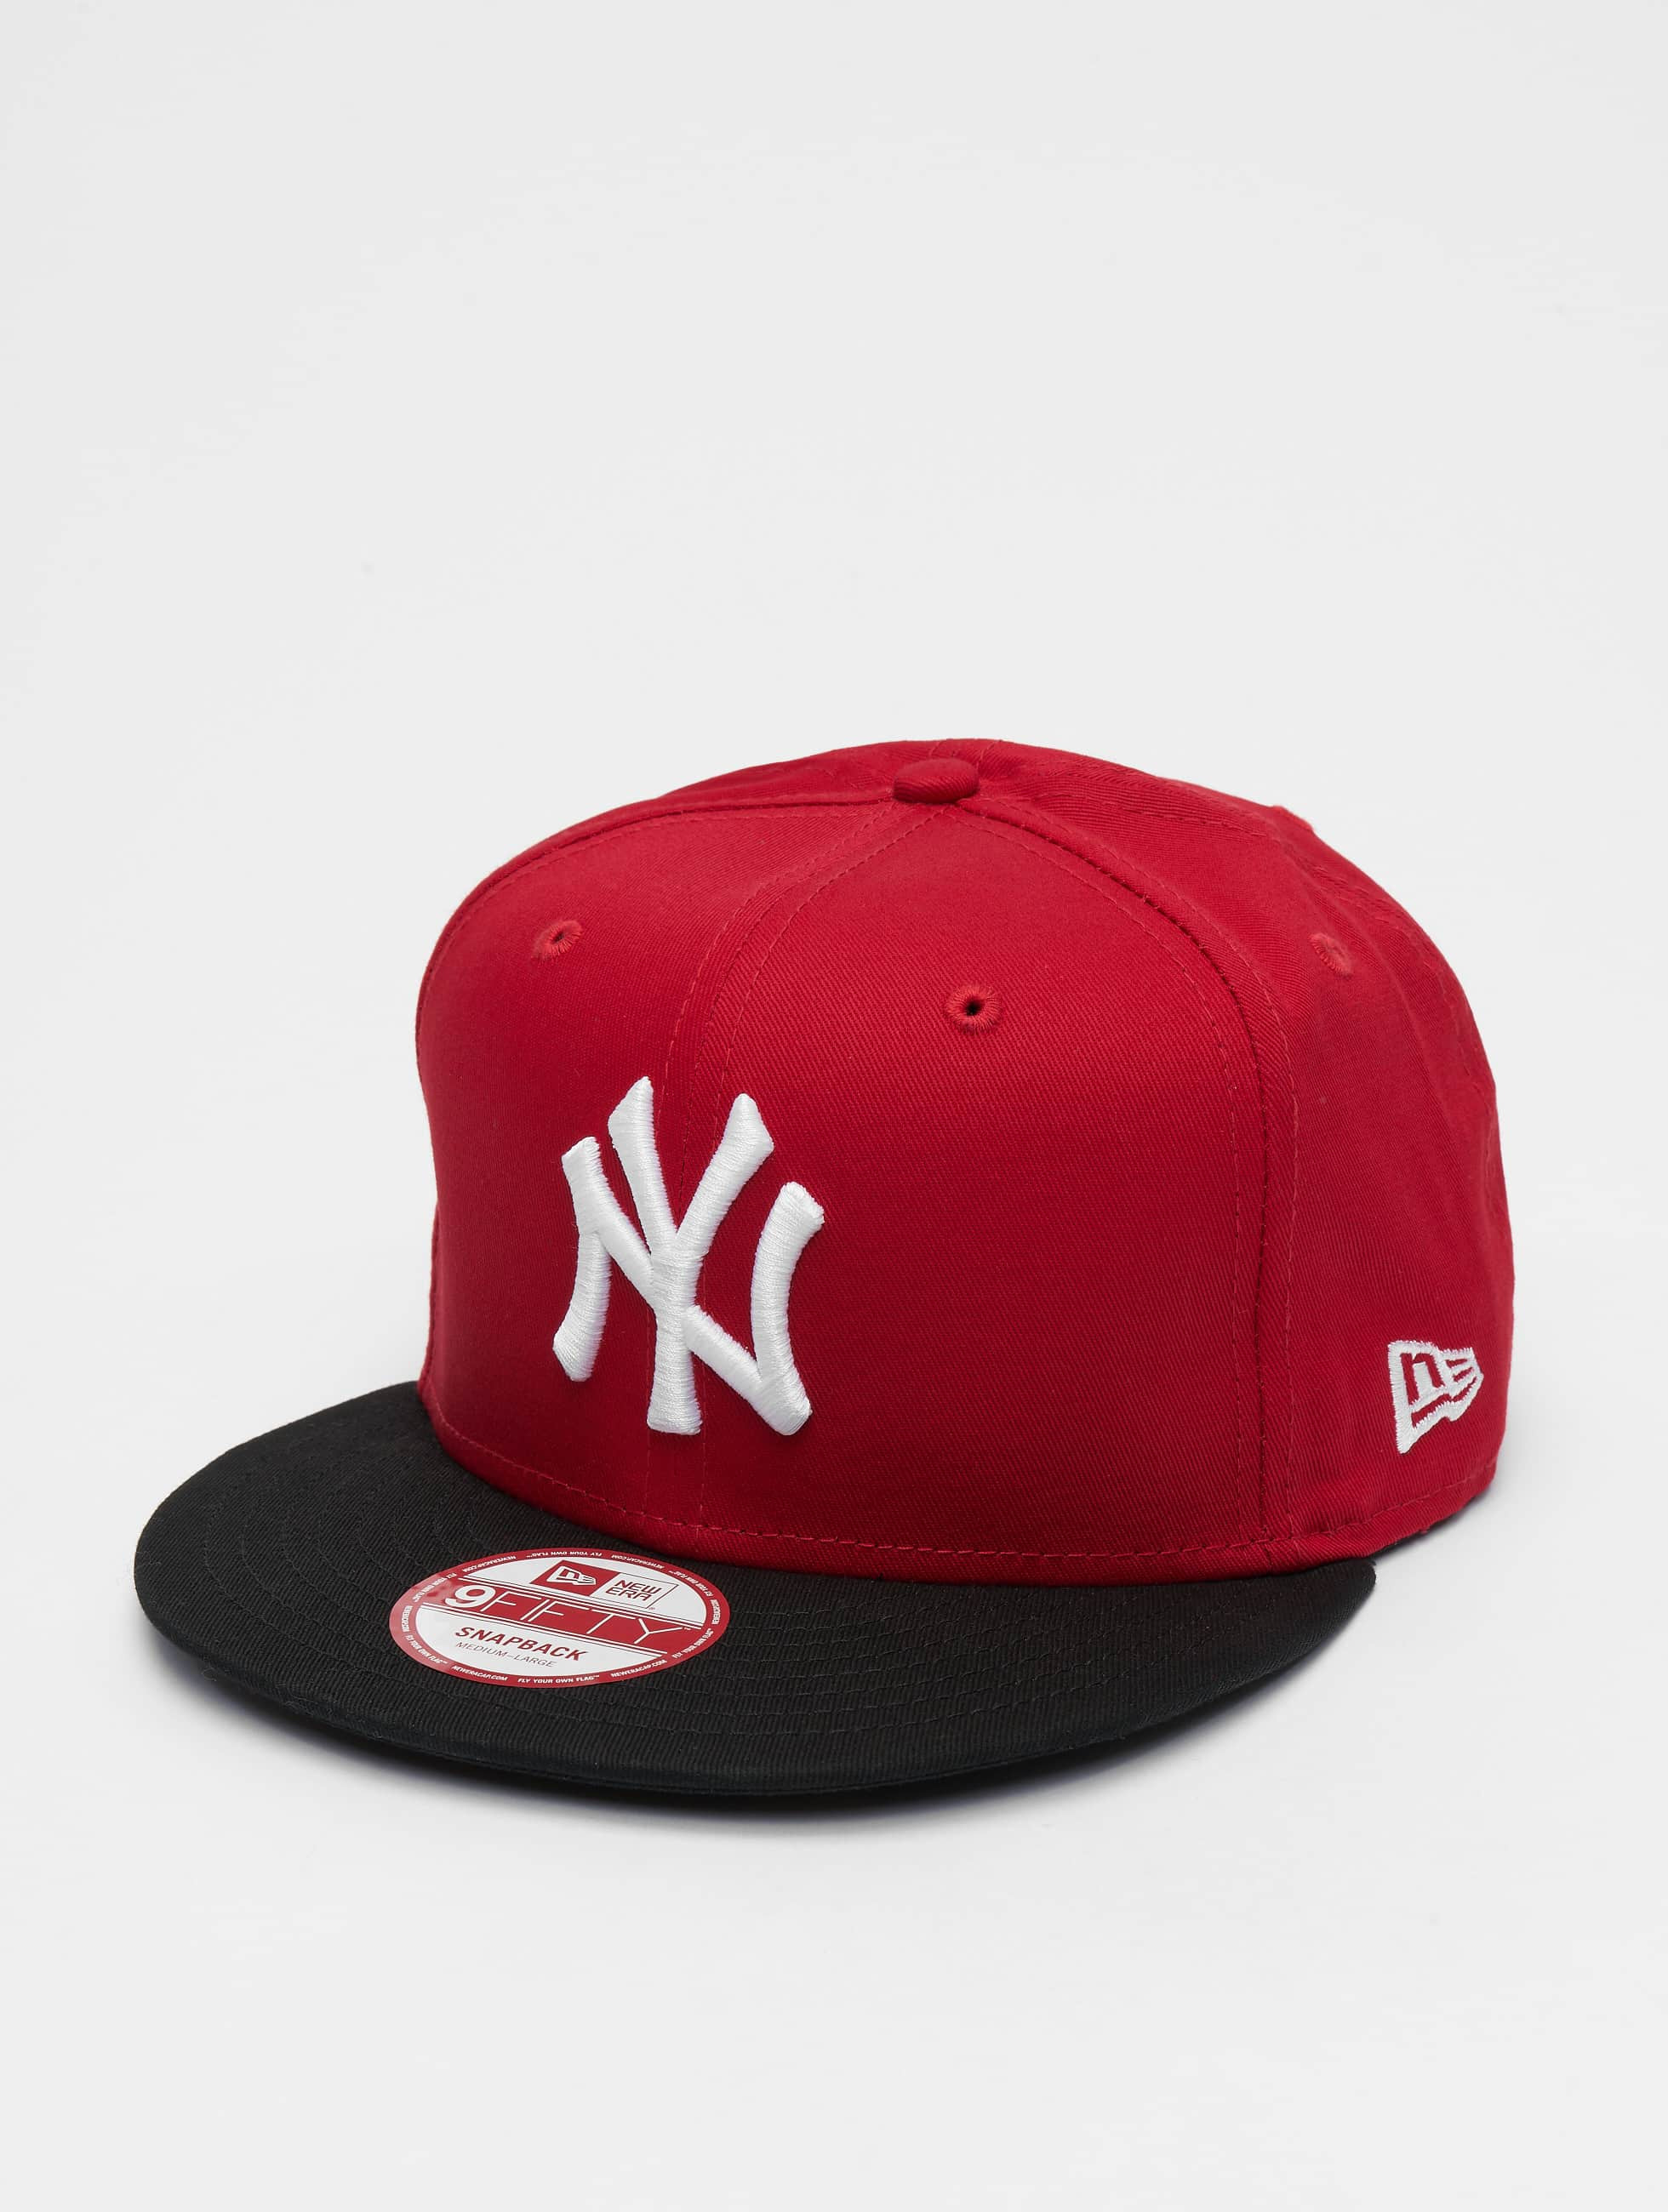 New Era MLB Washington Nationals Red Hat Size ML  eBay